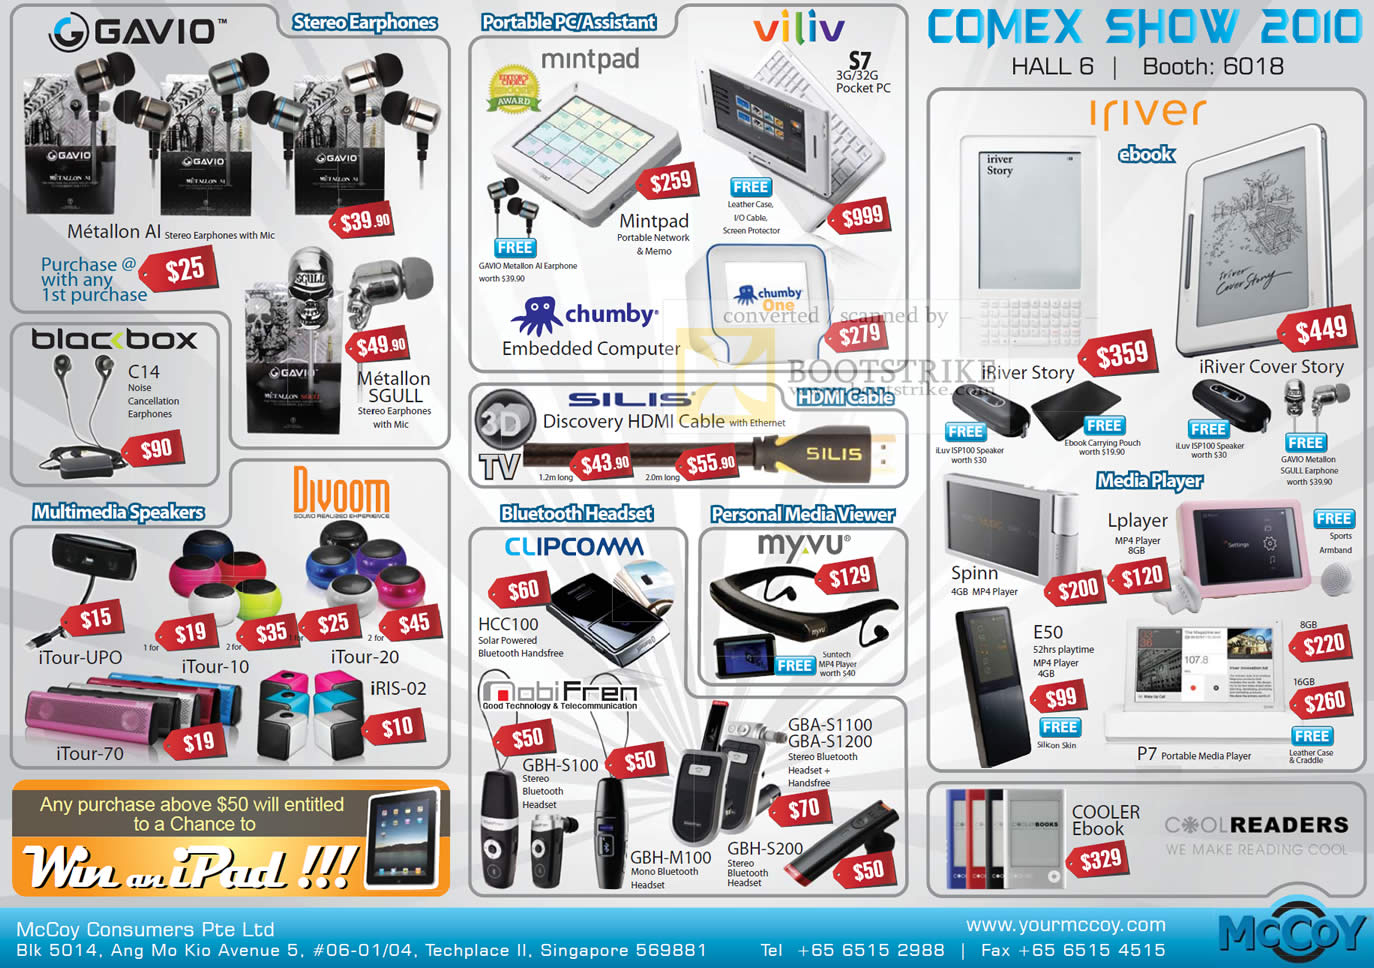 Comex 2010 price list image brochure of Mccoy Gavio Earphones Portable PC Viliv IRiver EBook Media Player Headset Viewer Speakers Blac Box Myvu Clipcomm